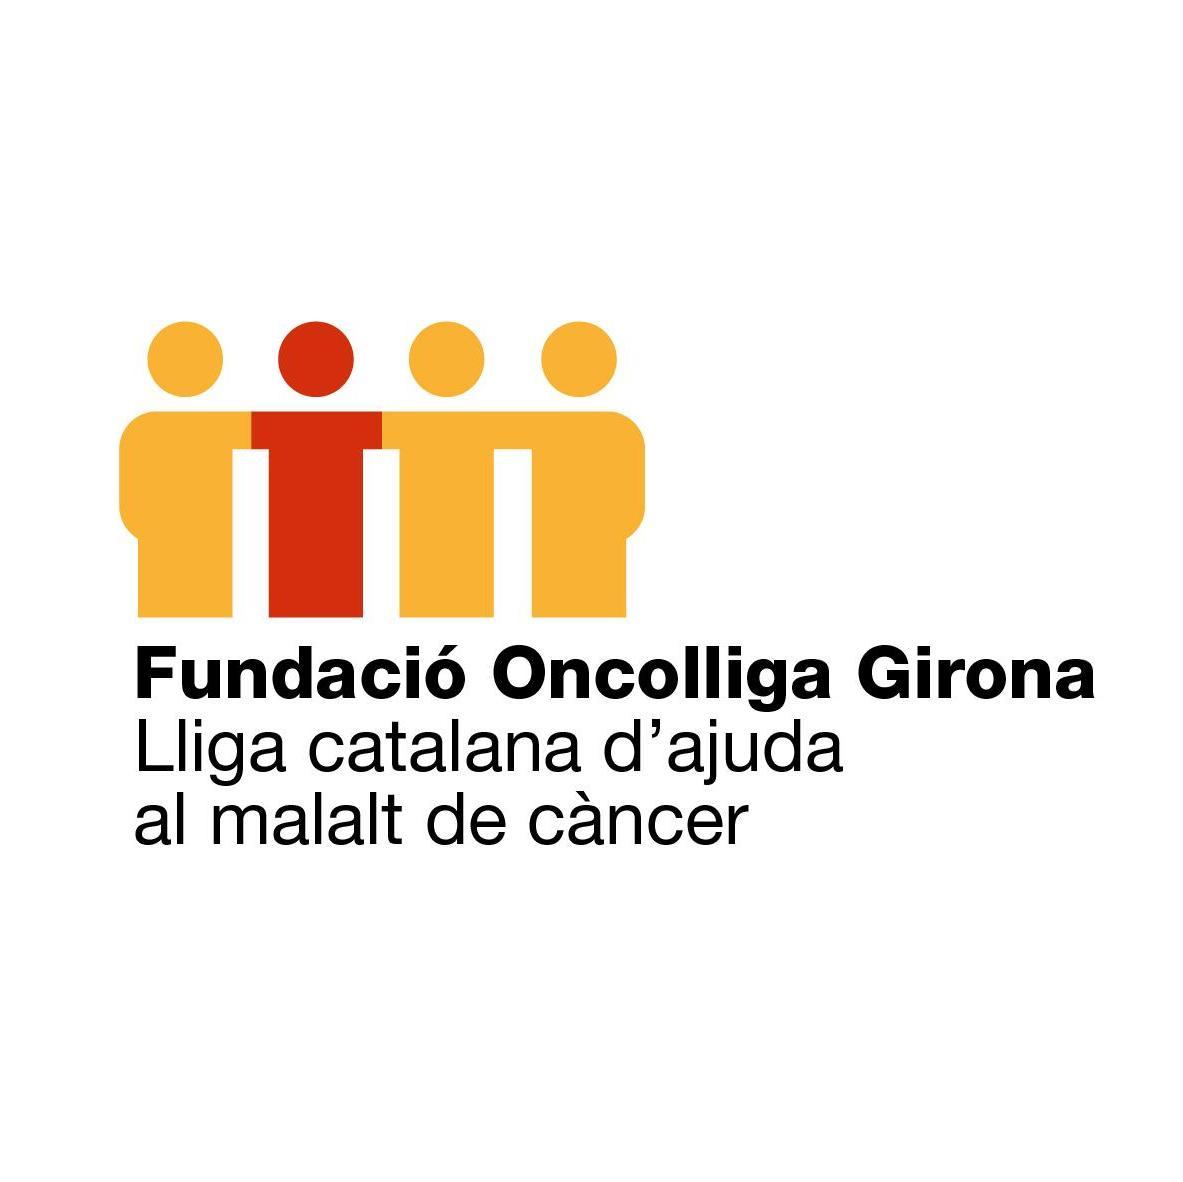 Fundació Oncolliga Girona